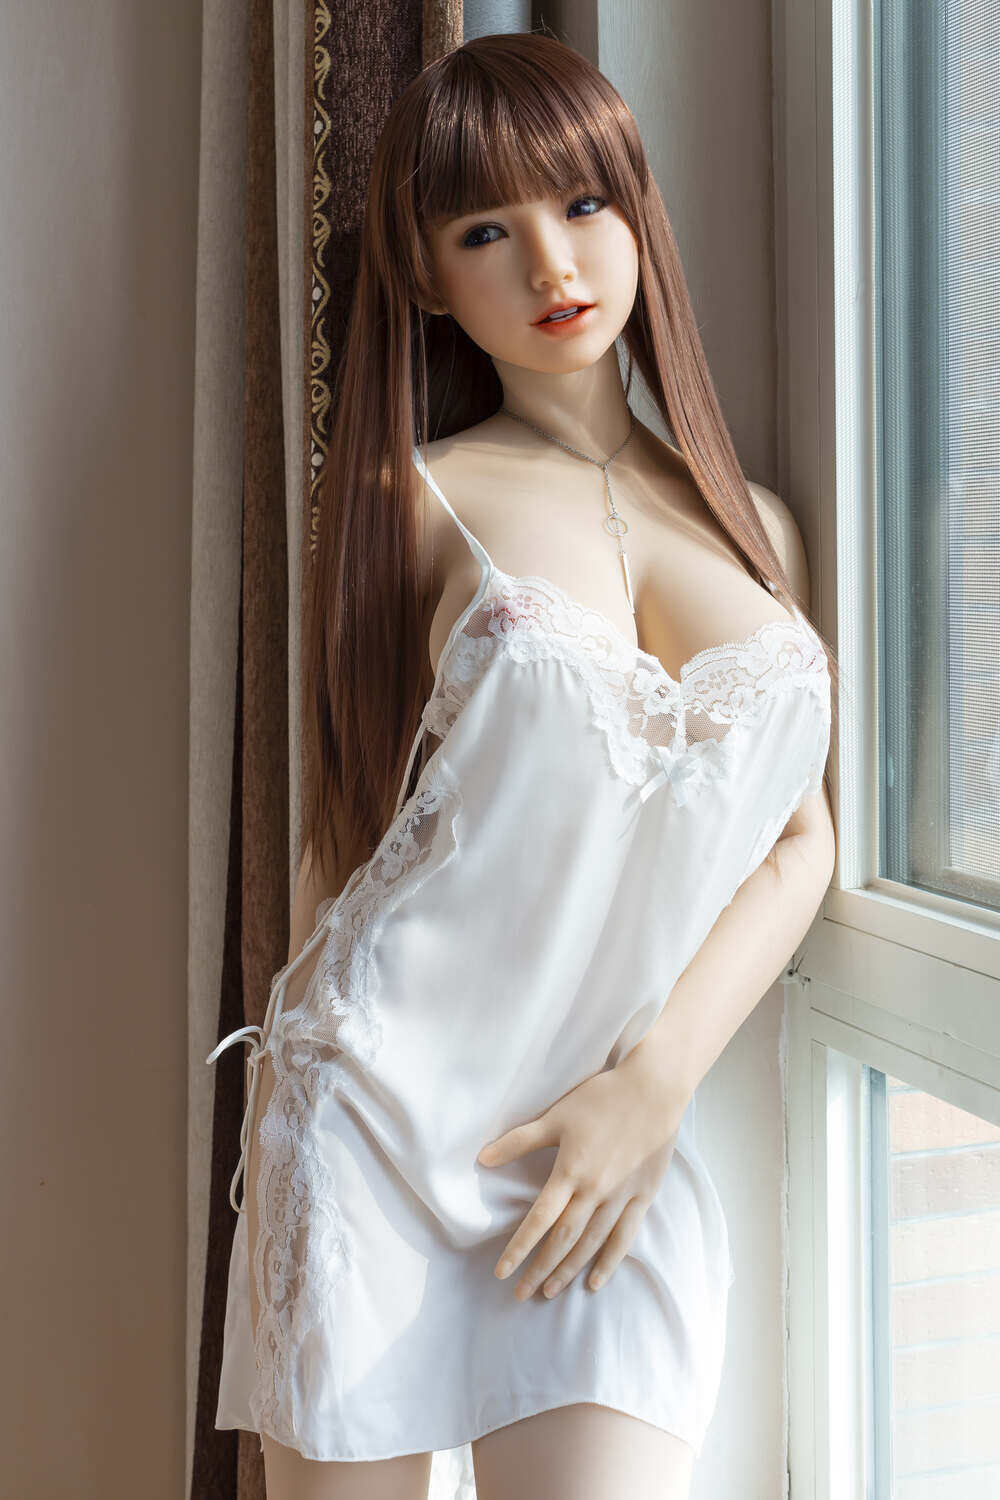 Mariah Nice Medium Breast Cheap New Silicone Sanhui Sex Doll image7